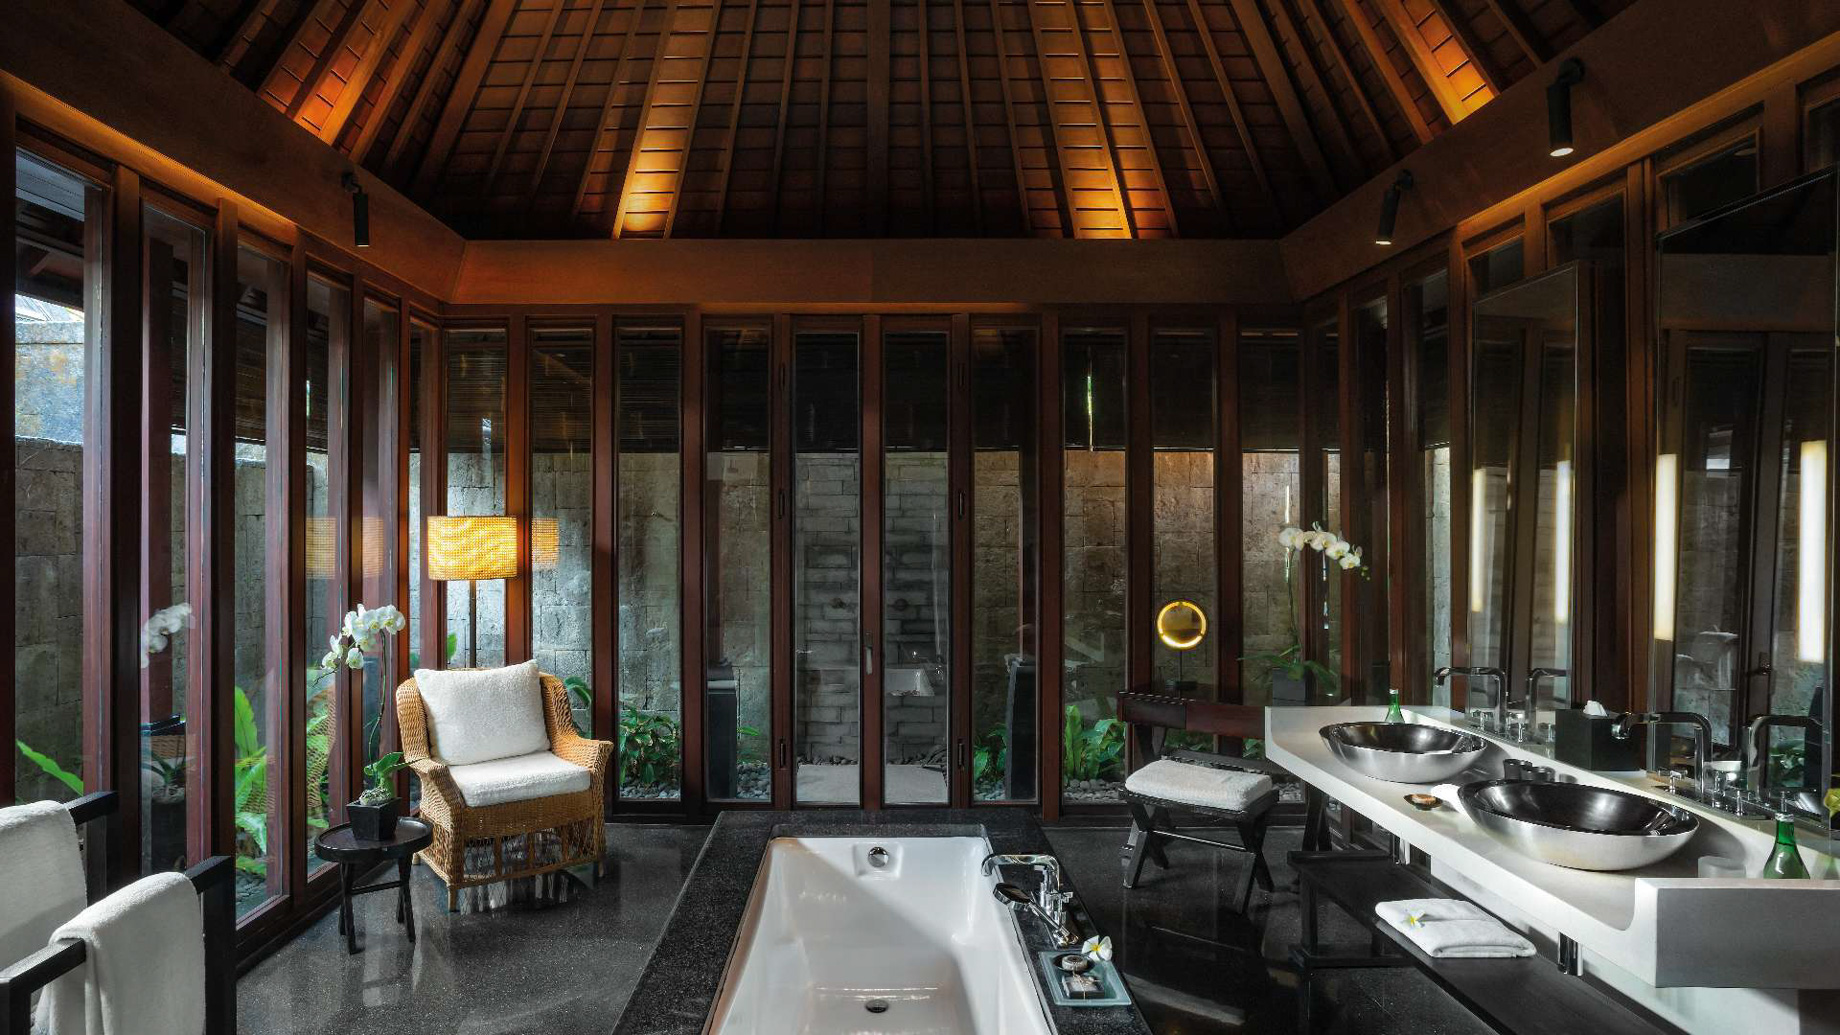 Bvlgari Resort Bali – Uluwatu, Bali, Indonesia – The Bvlgari Villa Bathroom